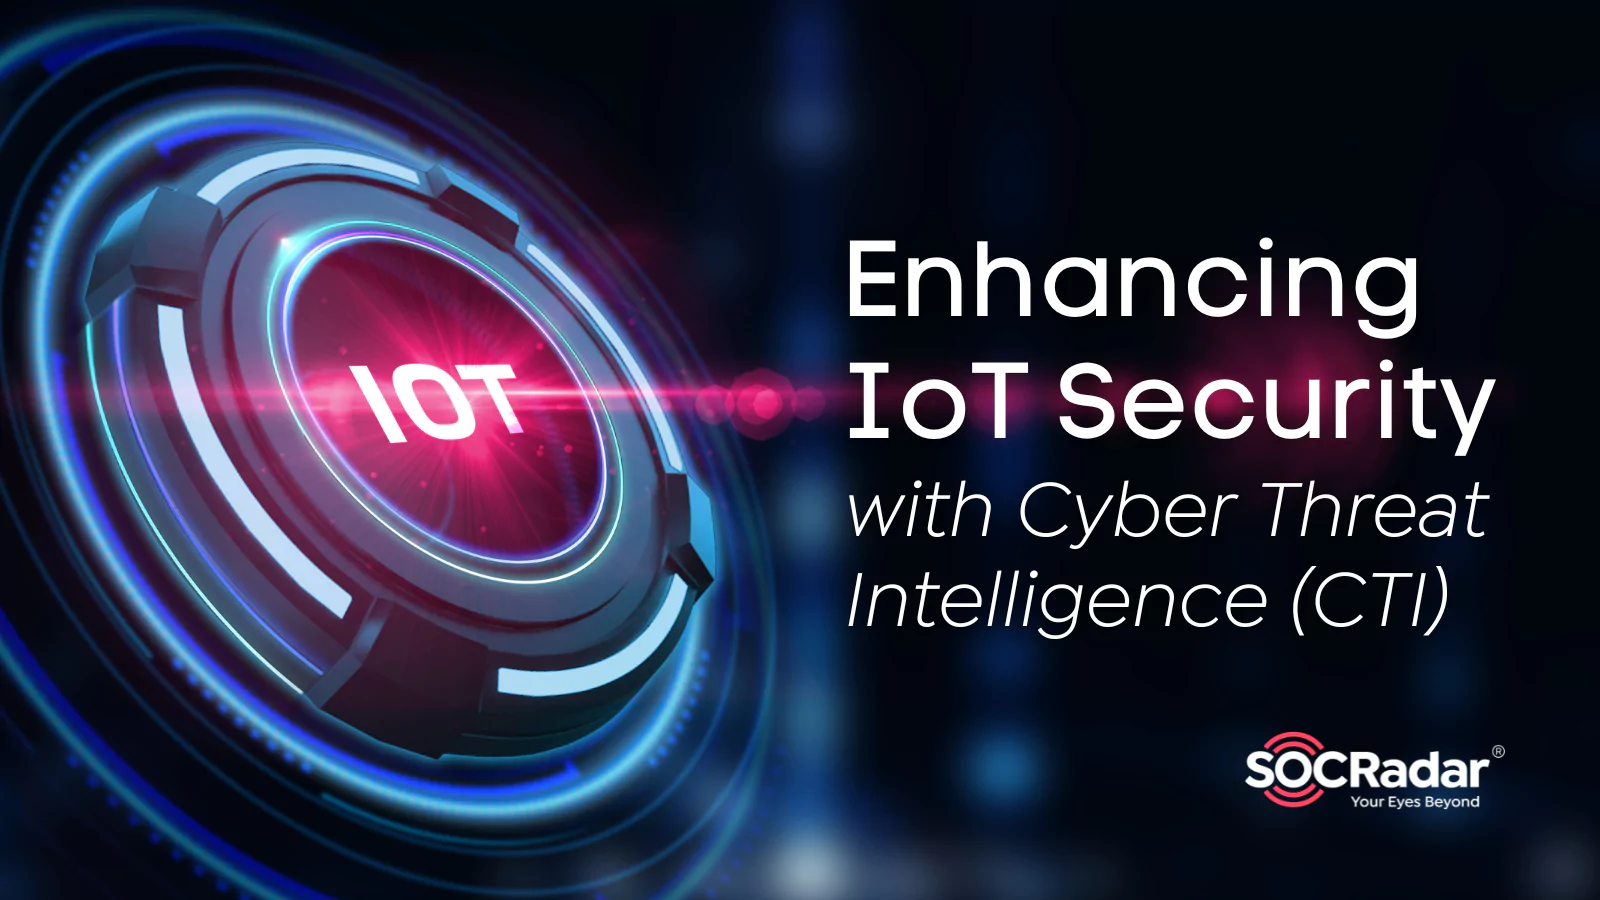 SOCRadar® Cyber Intelligence Inc. | Enhancing IoT Security with Cyber Threat Intelligence (CTI)